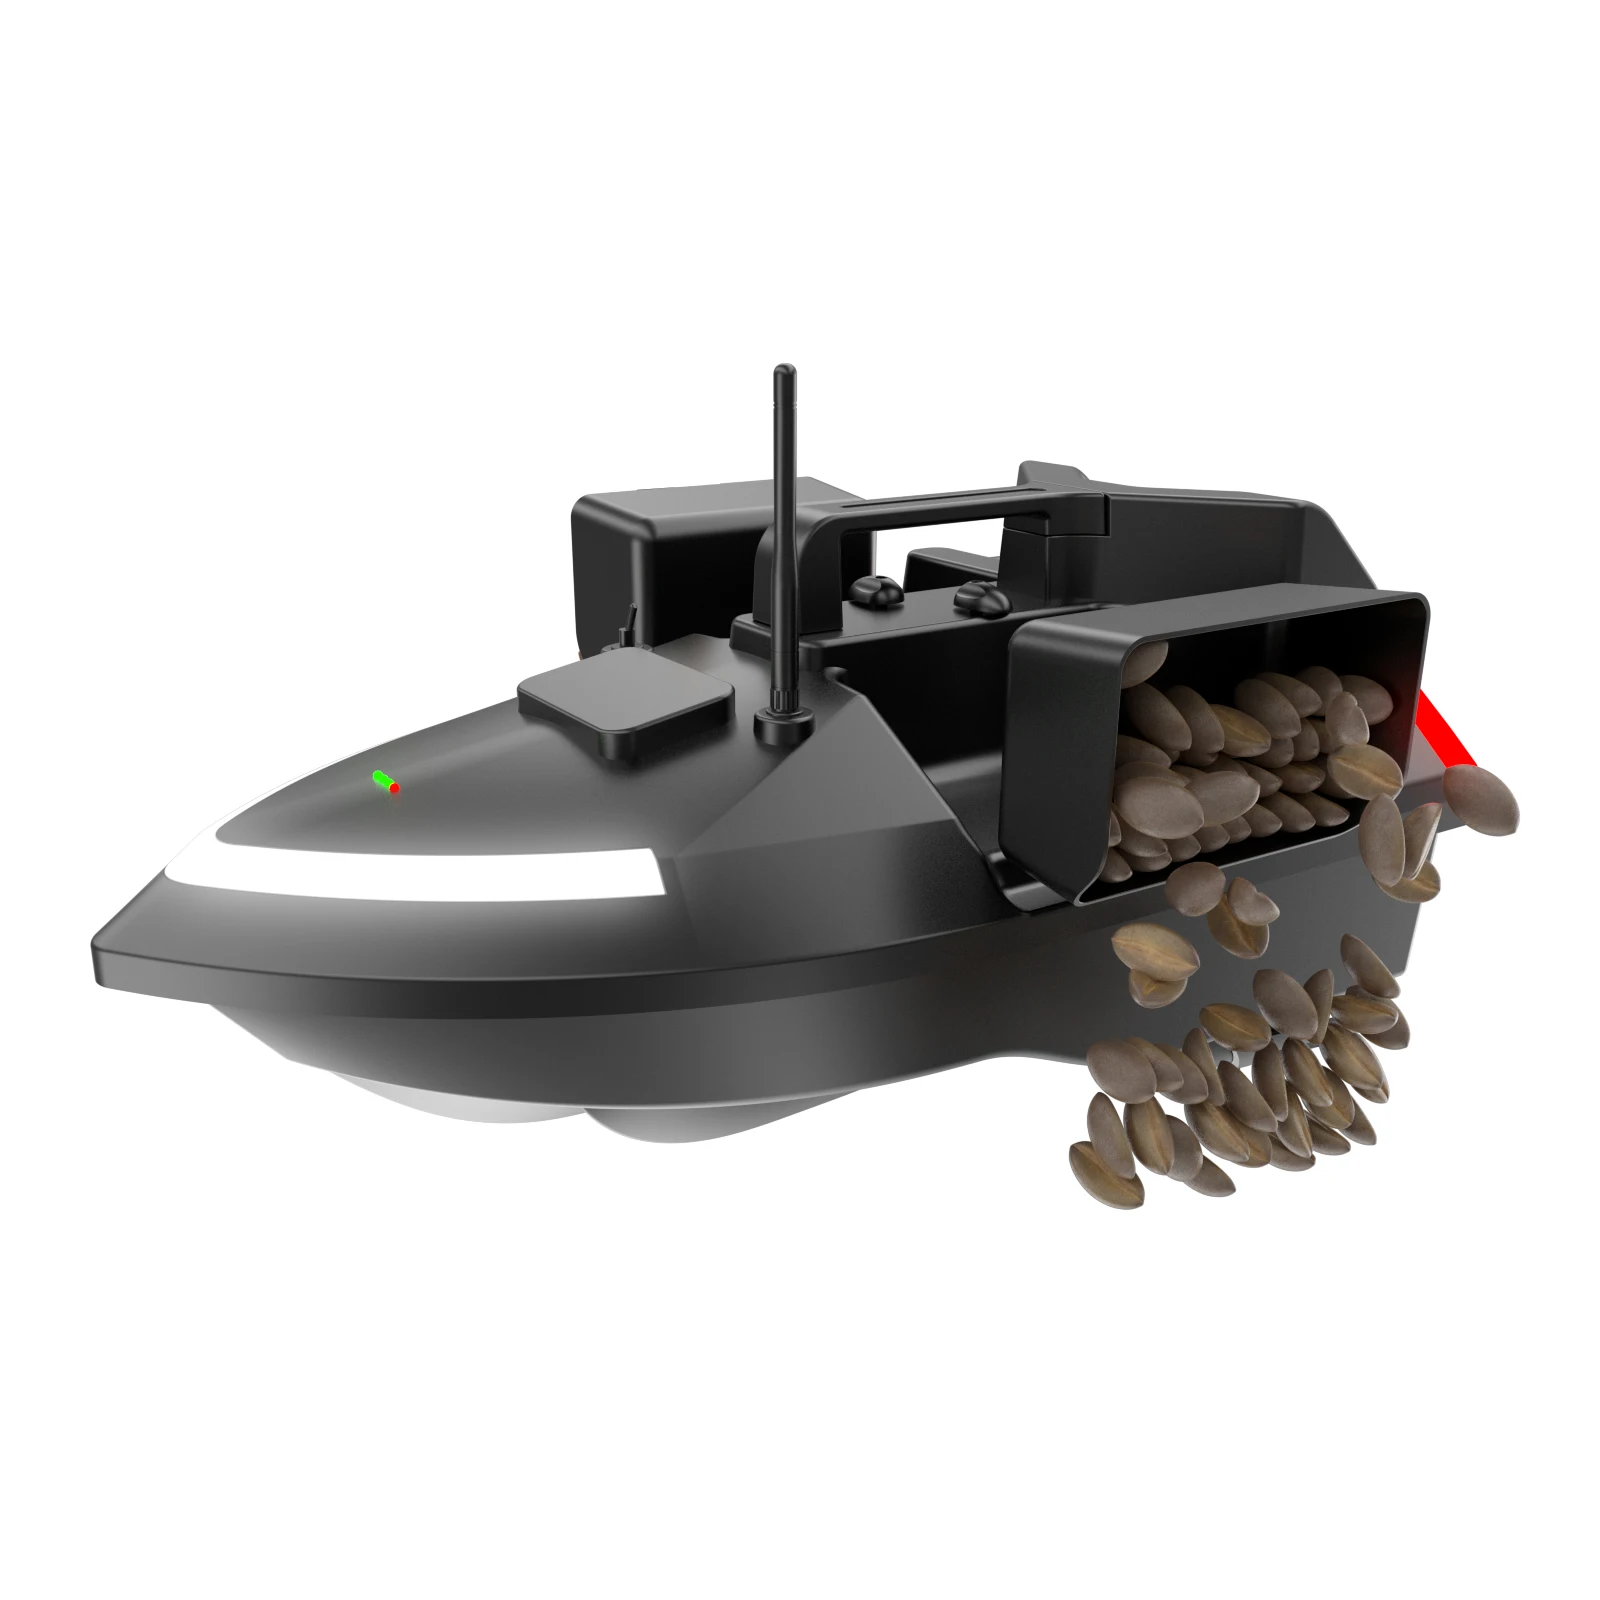 Flytec V801 One Hand Control 3 Bait Tanks 2KG Load Boat With Night Light 500M Auto Navigation RC Carp Fishing Bait Boat